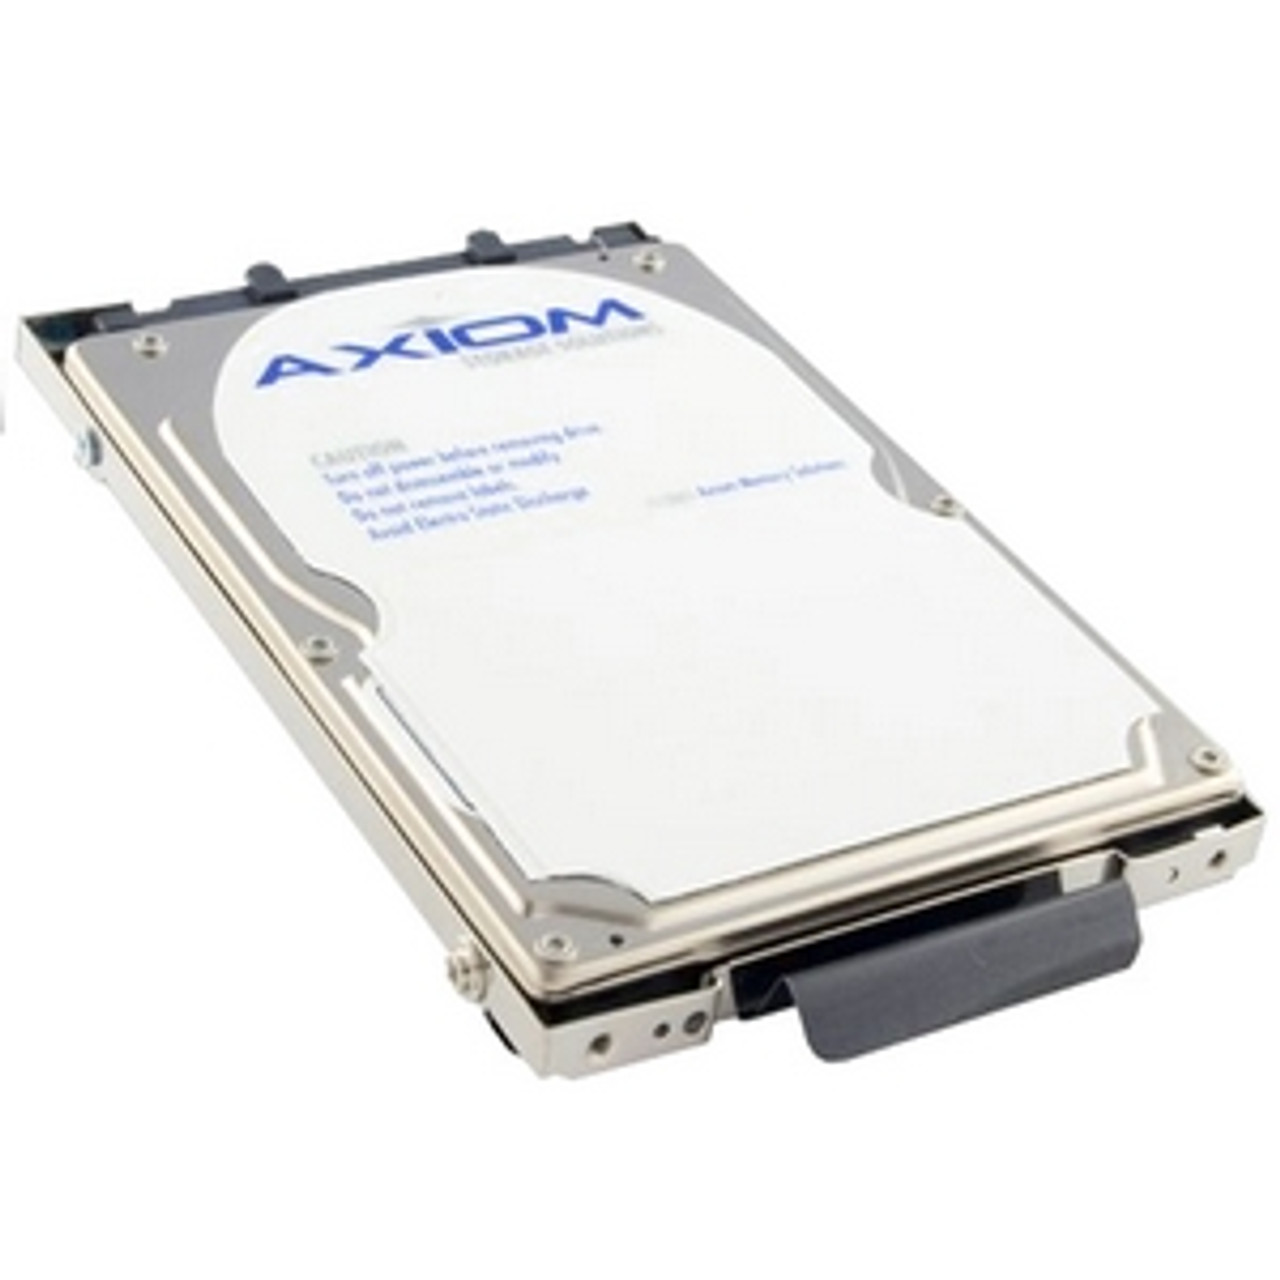 AXH-2020 - Axiom 20 GB 2.5 Plug-in Module Hard Drive - IDE